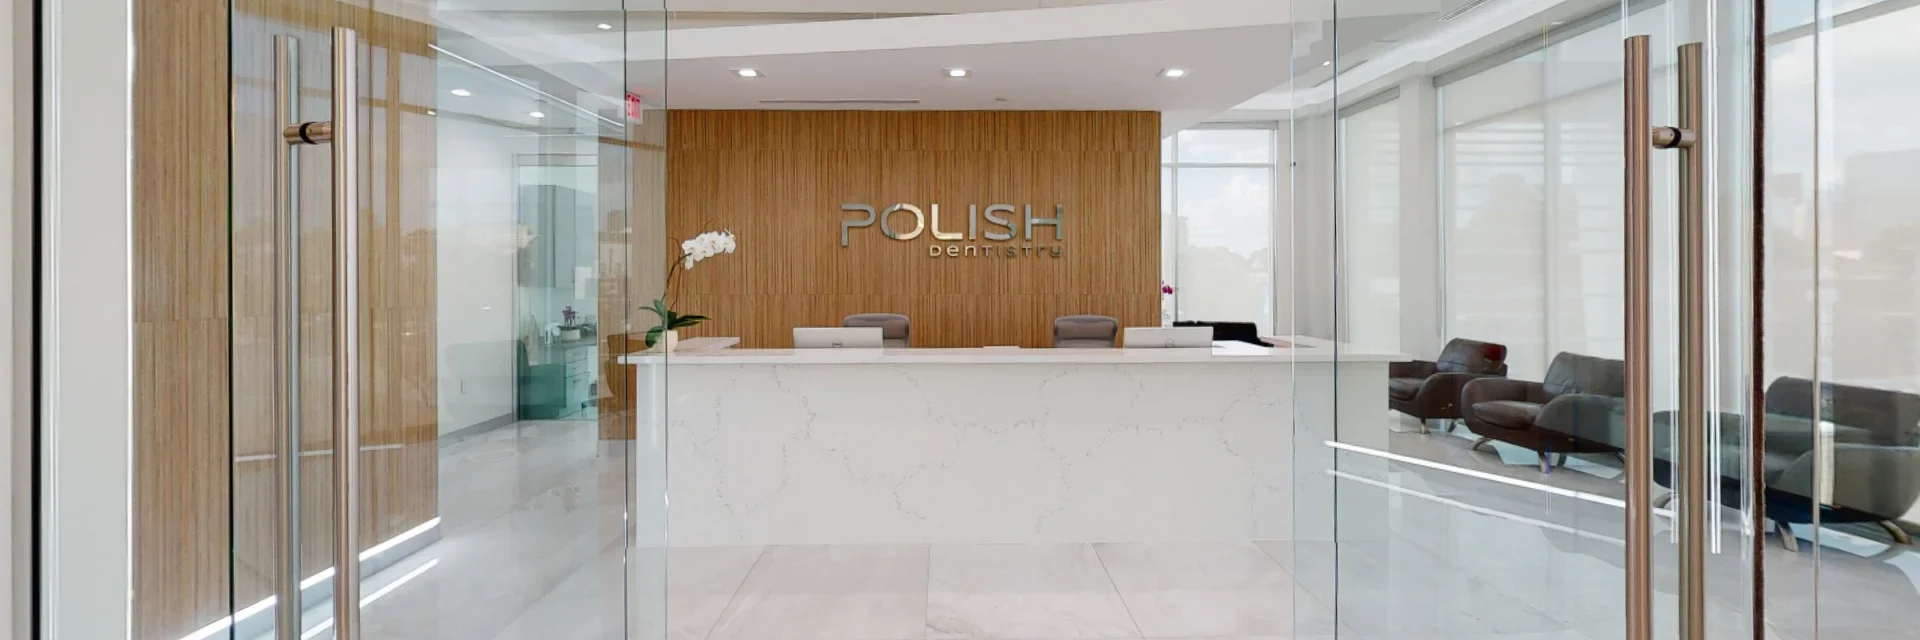 Polish Dentistry Front Desk, Dental Office in Houston, TX, 77006